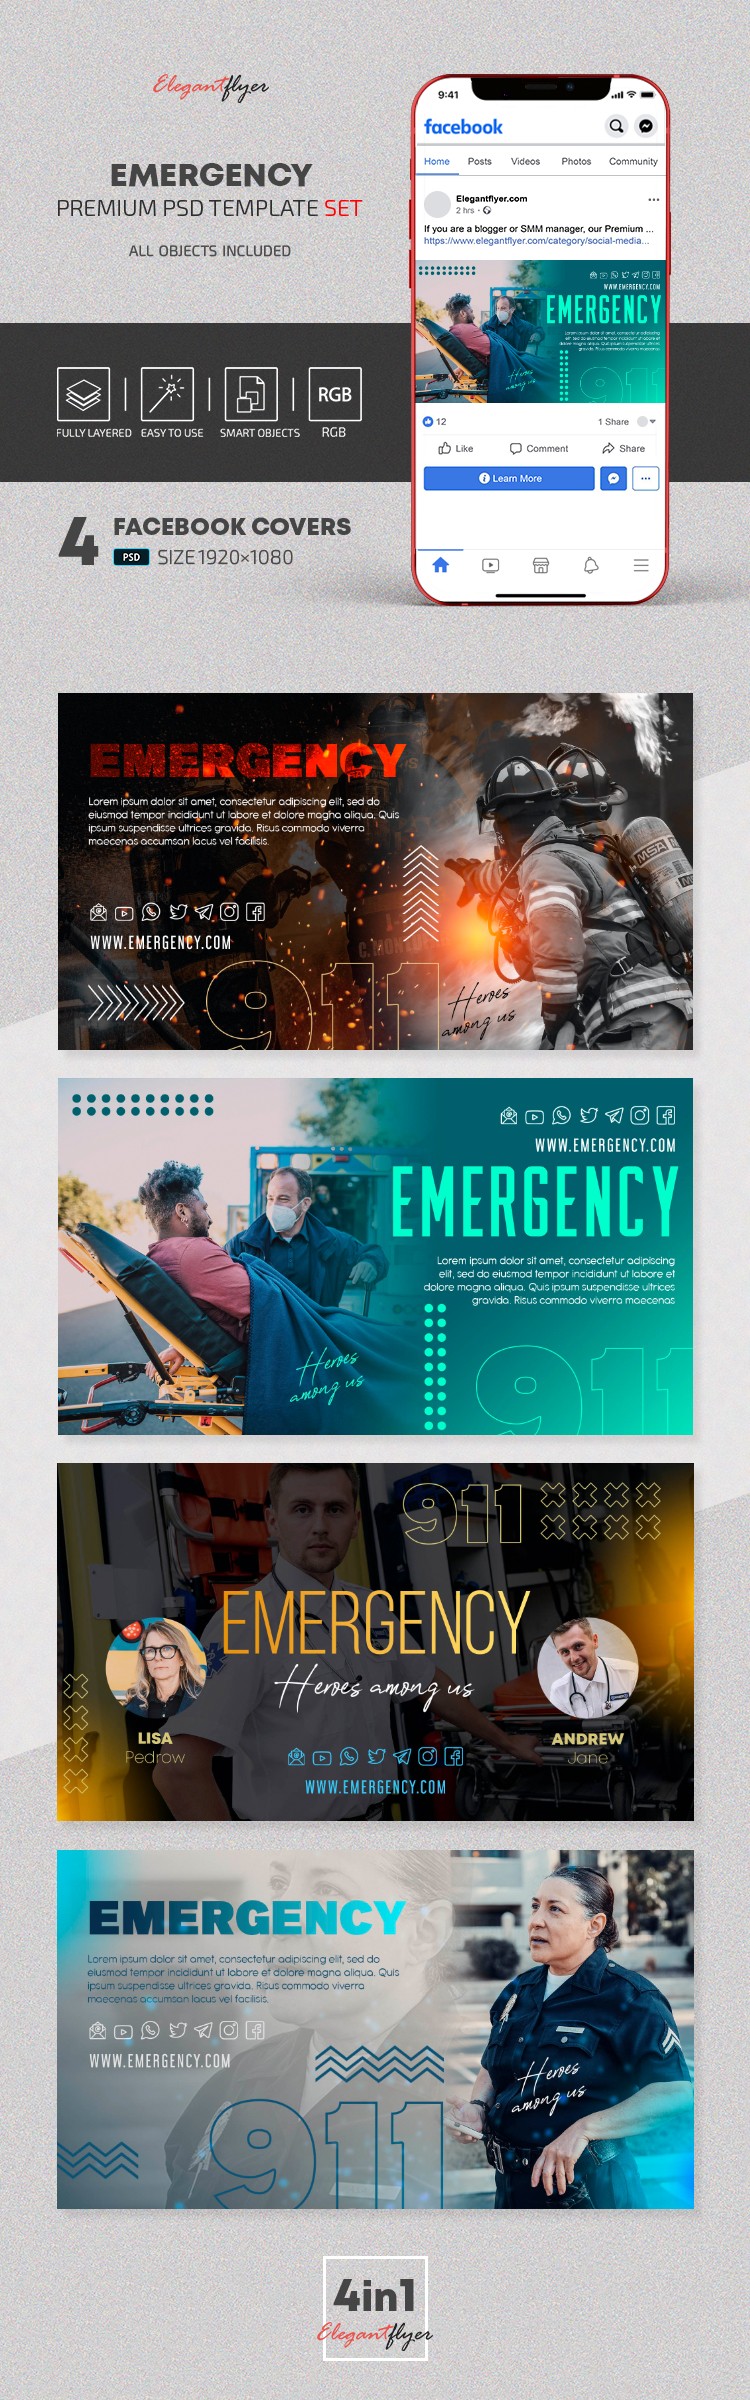 Emergency Facebook Cover by ElegantFlyer